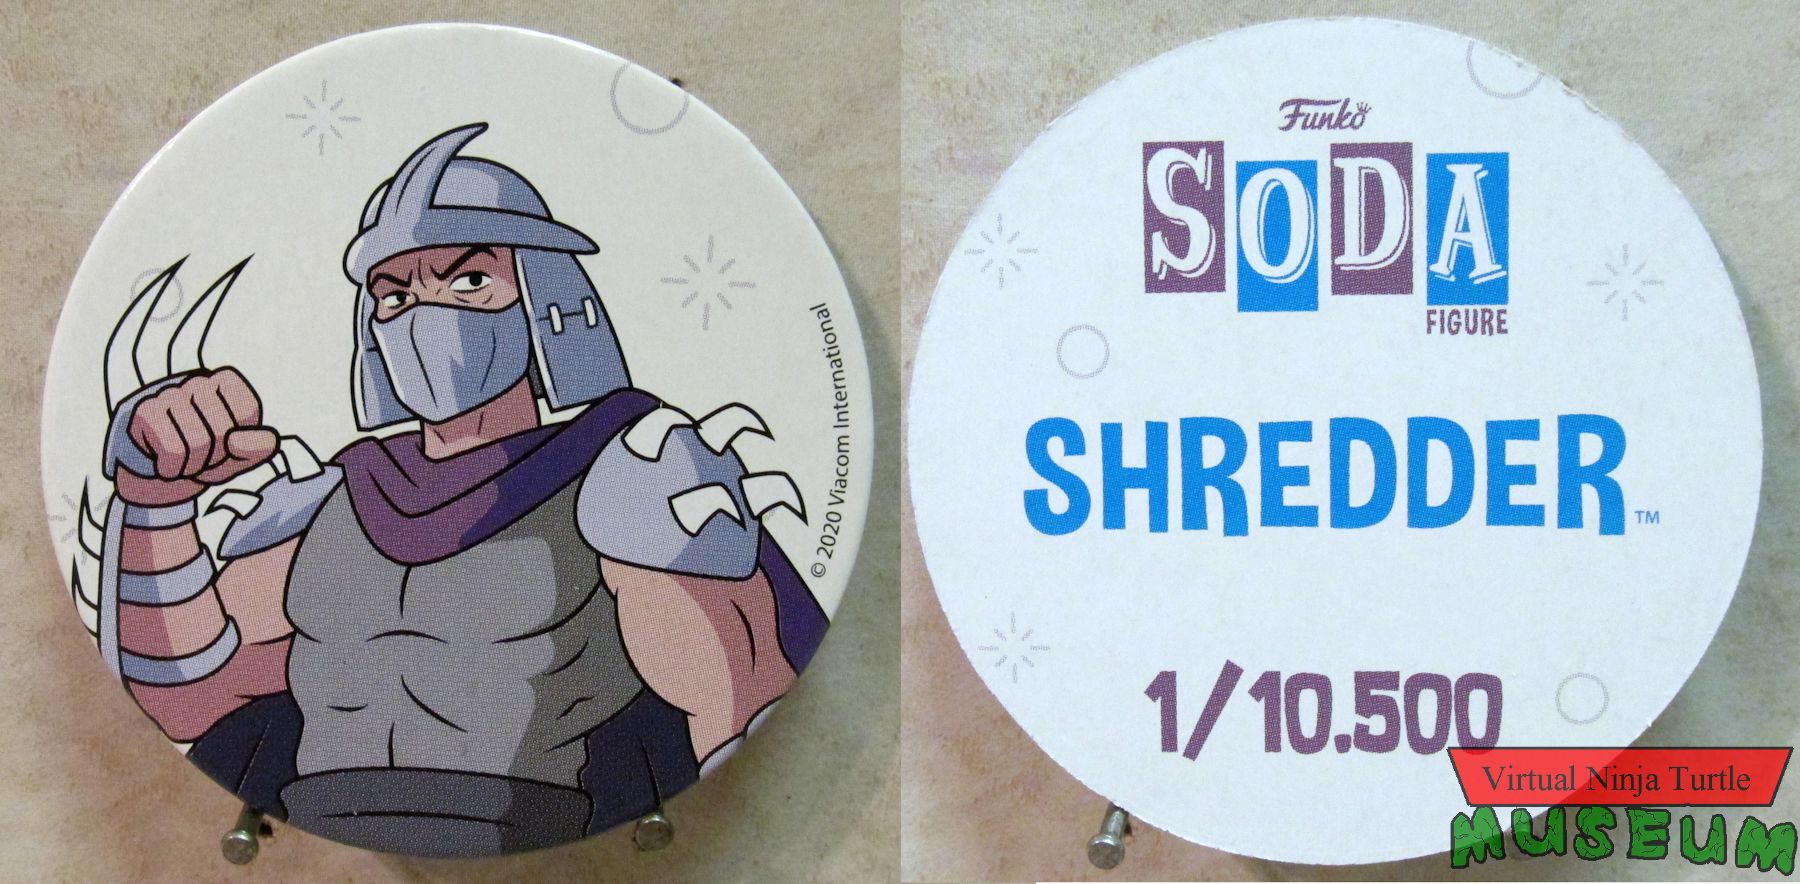 Shredder's accessory POG